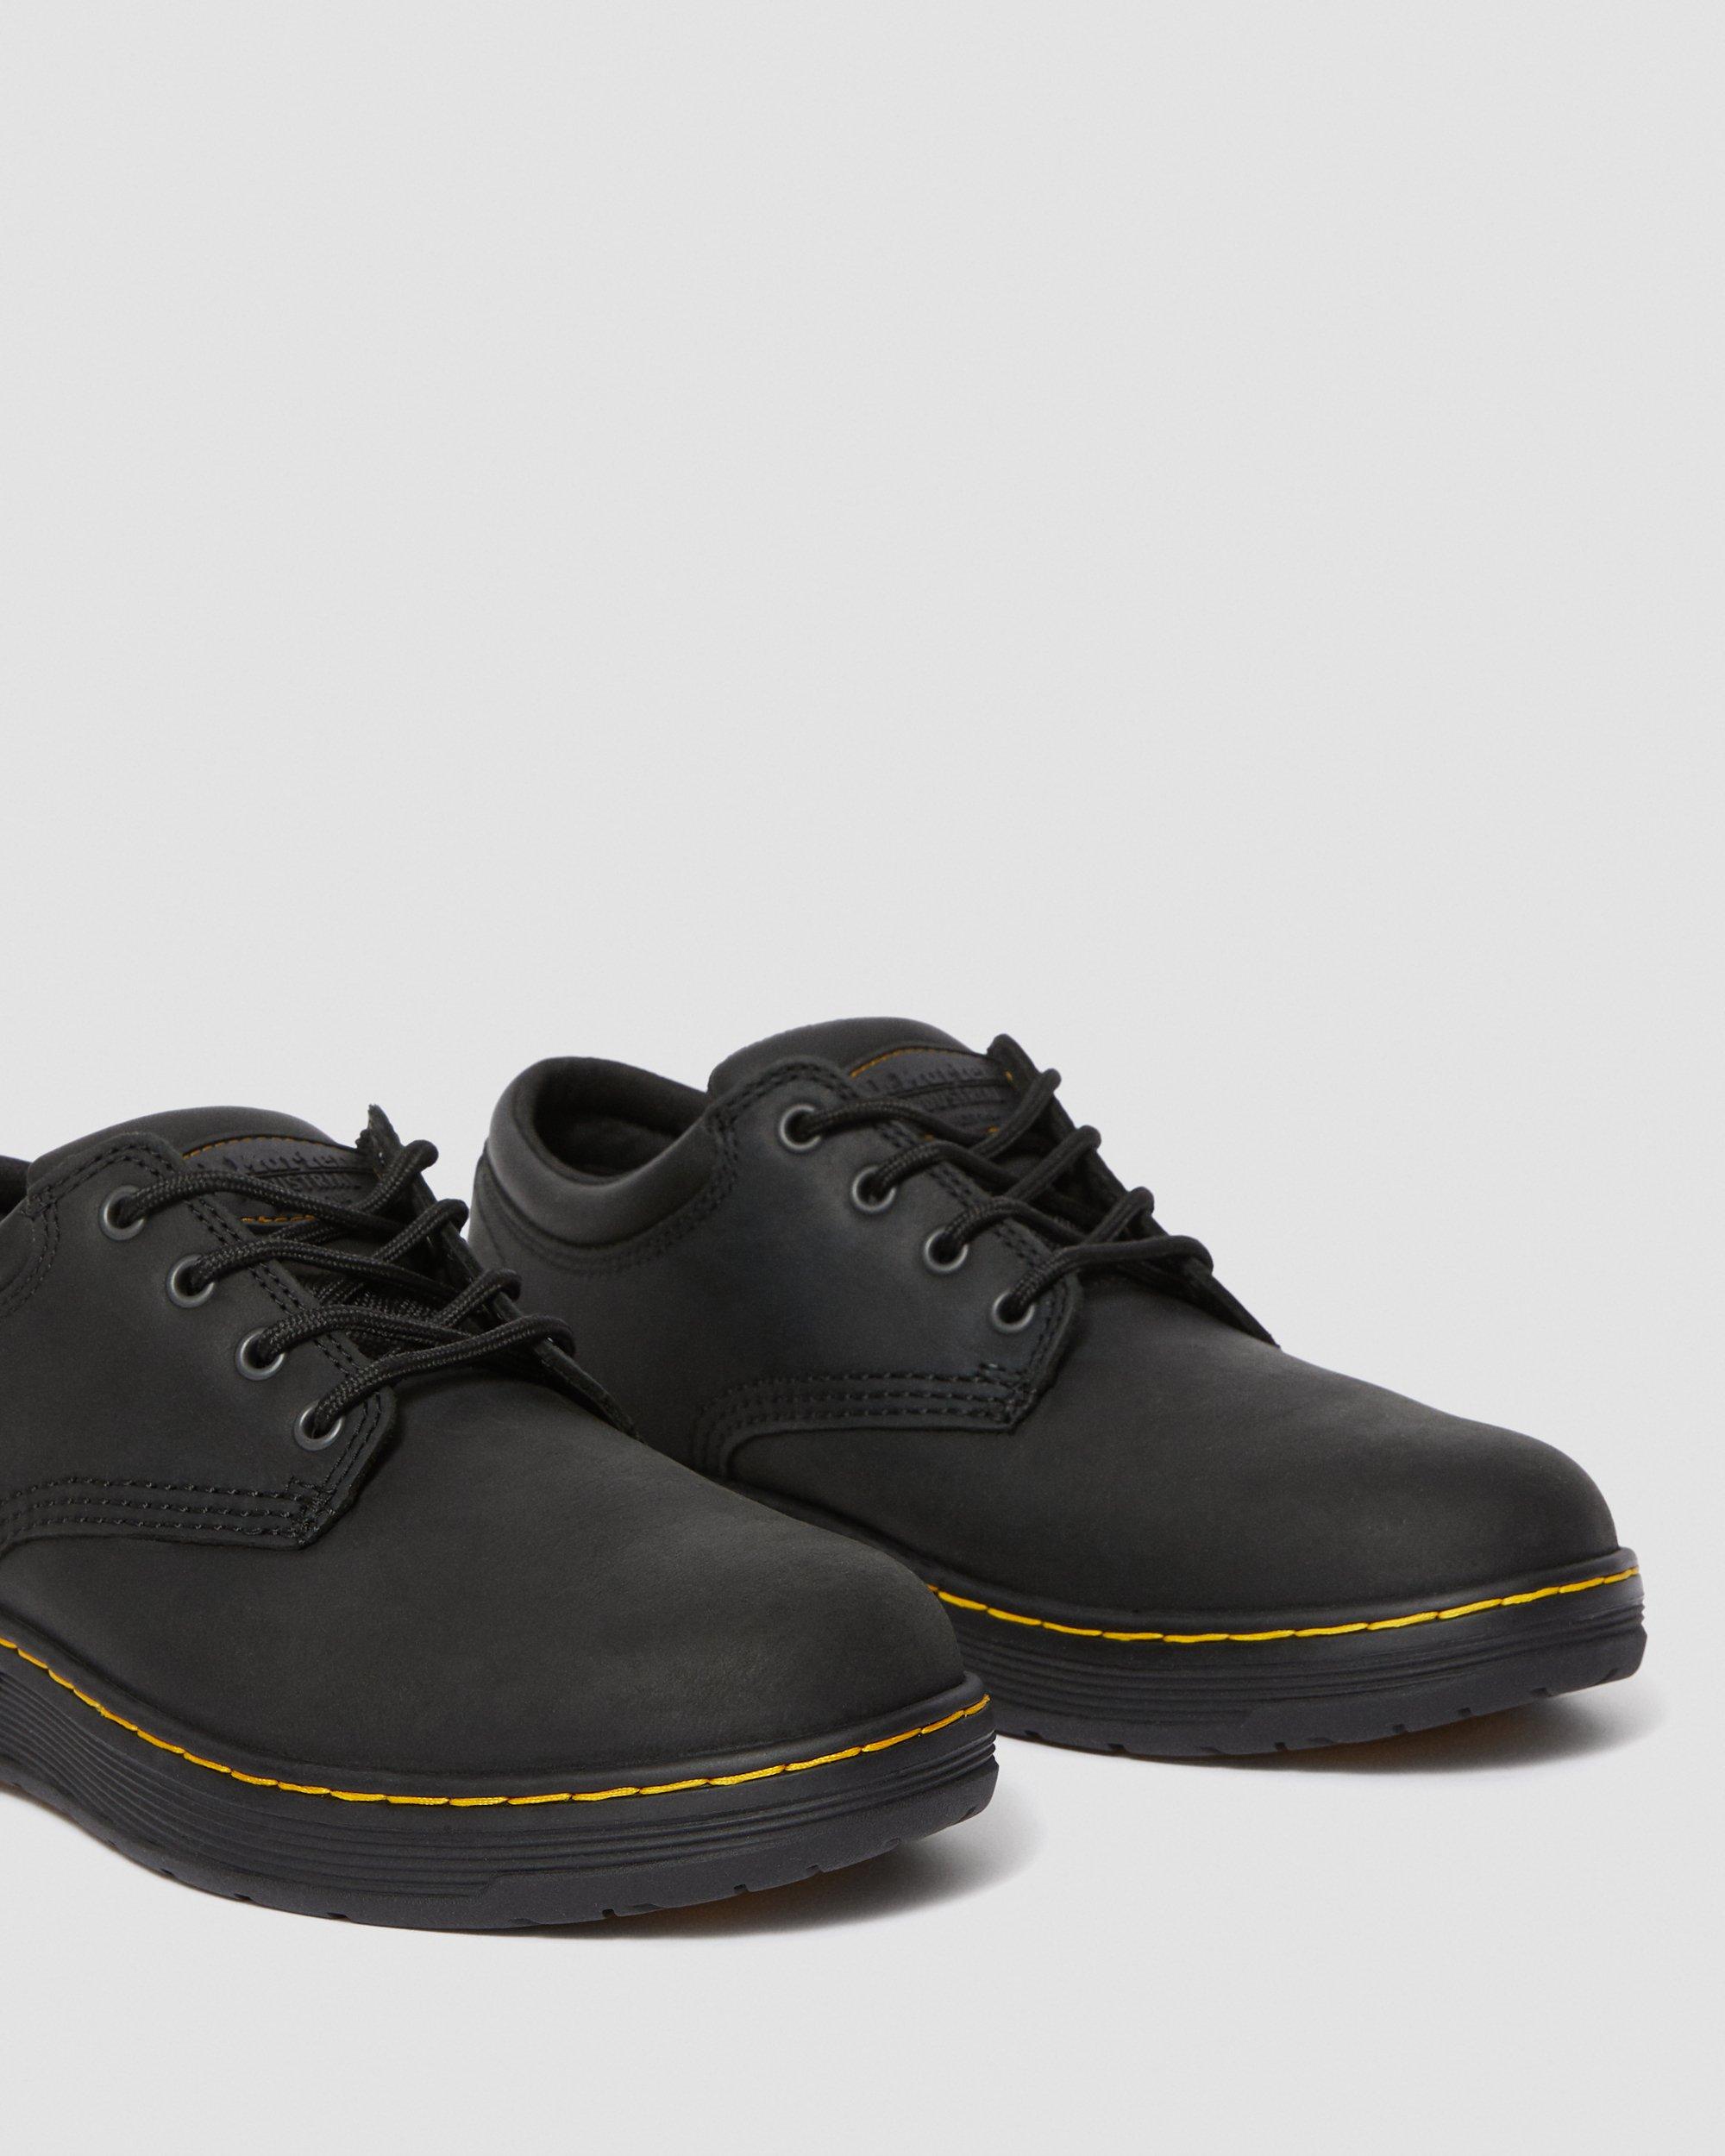 Culvert Slip Resistant Leather Work Shoes in Black